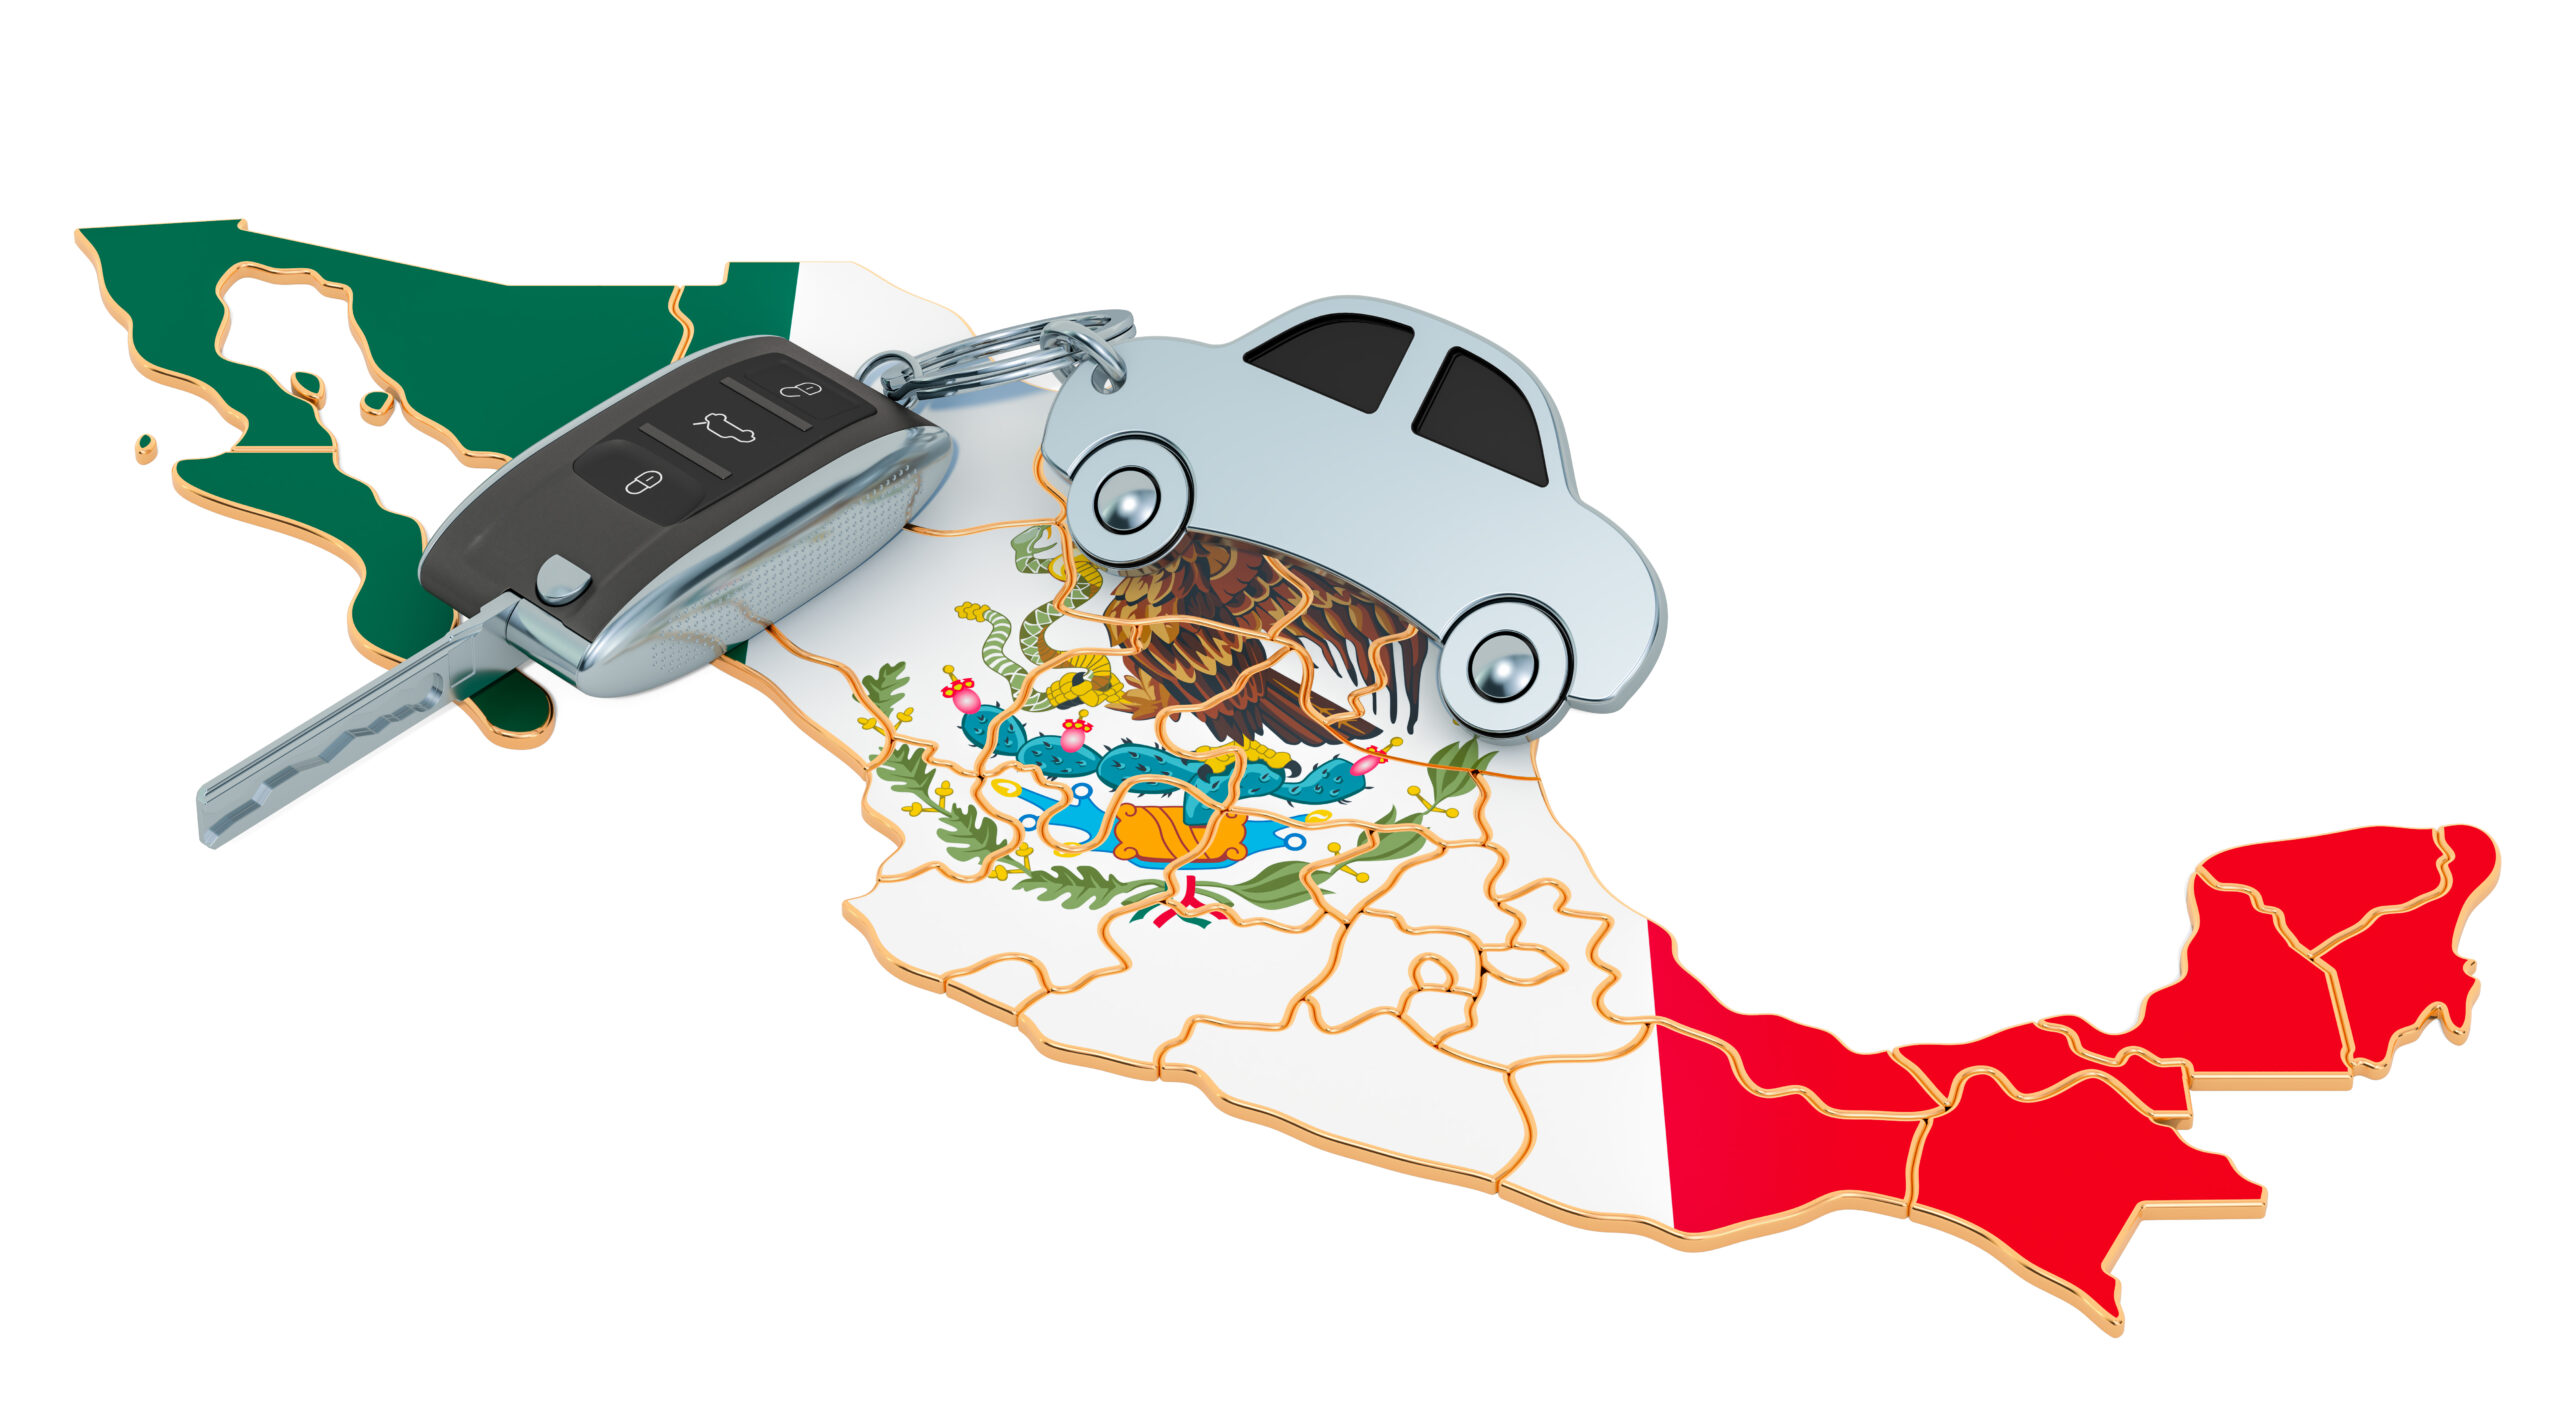 Full Coverage Vs. Liability Car Insurance for Mexico